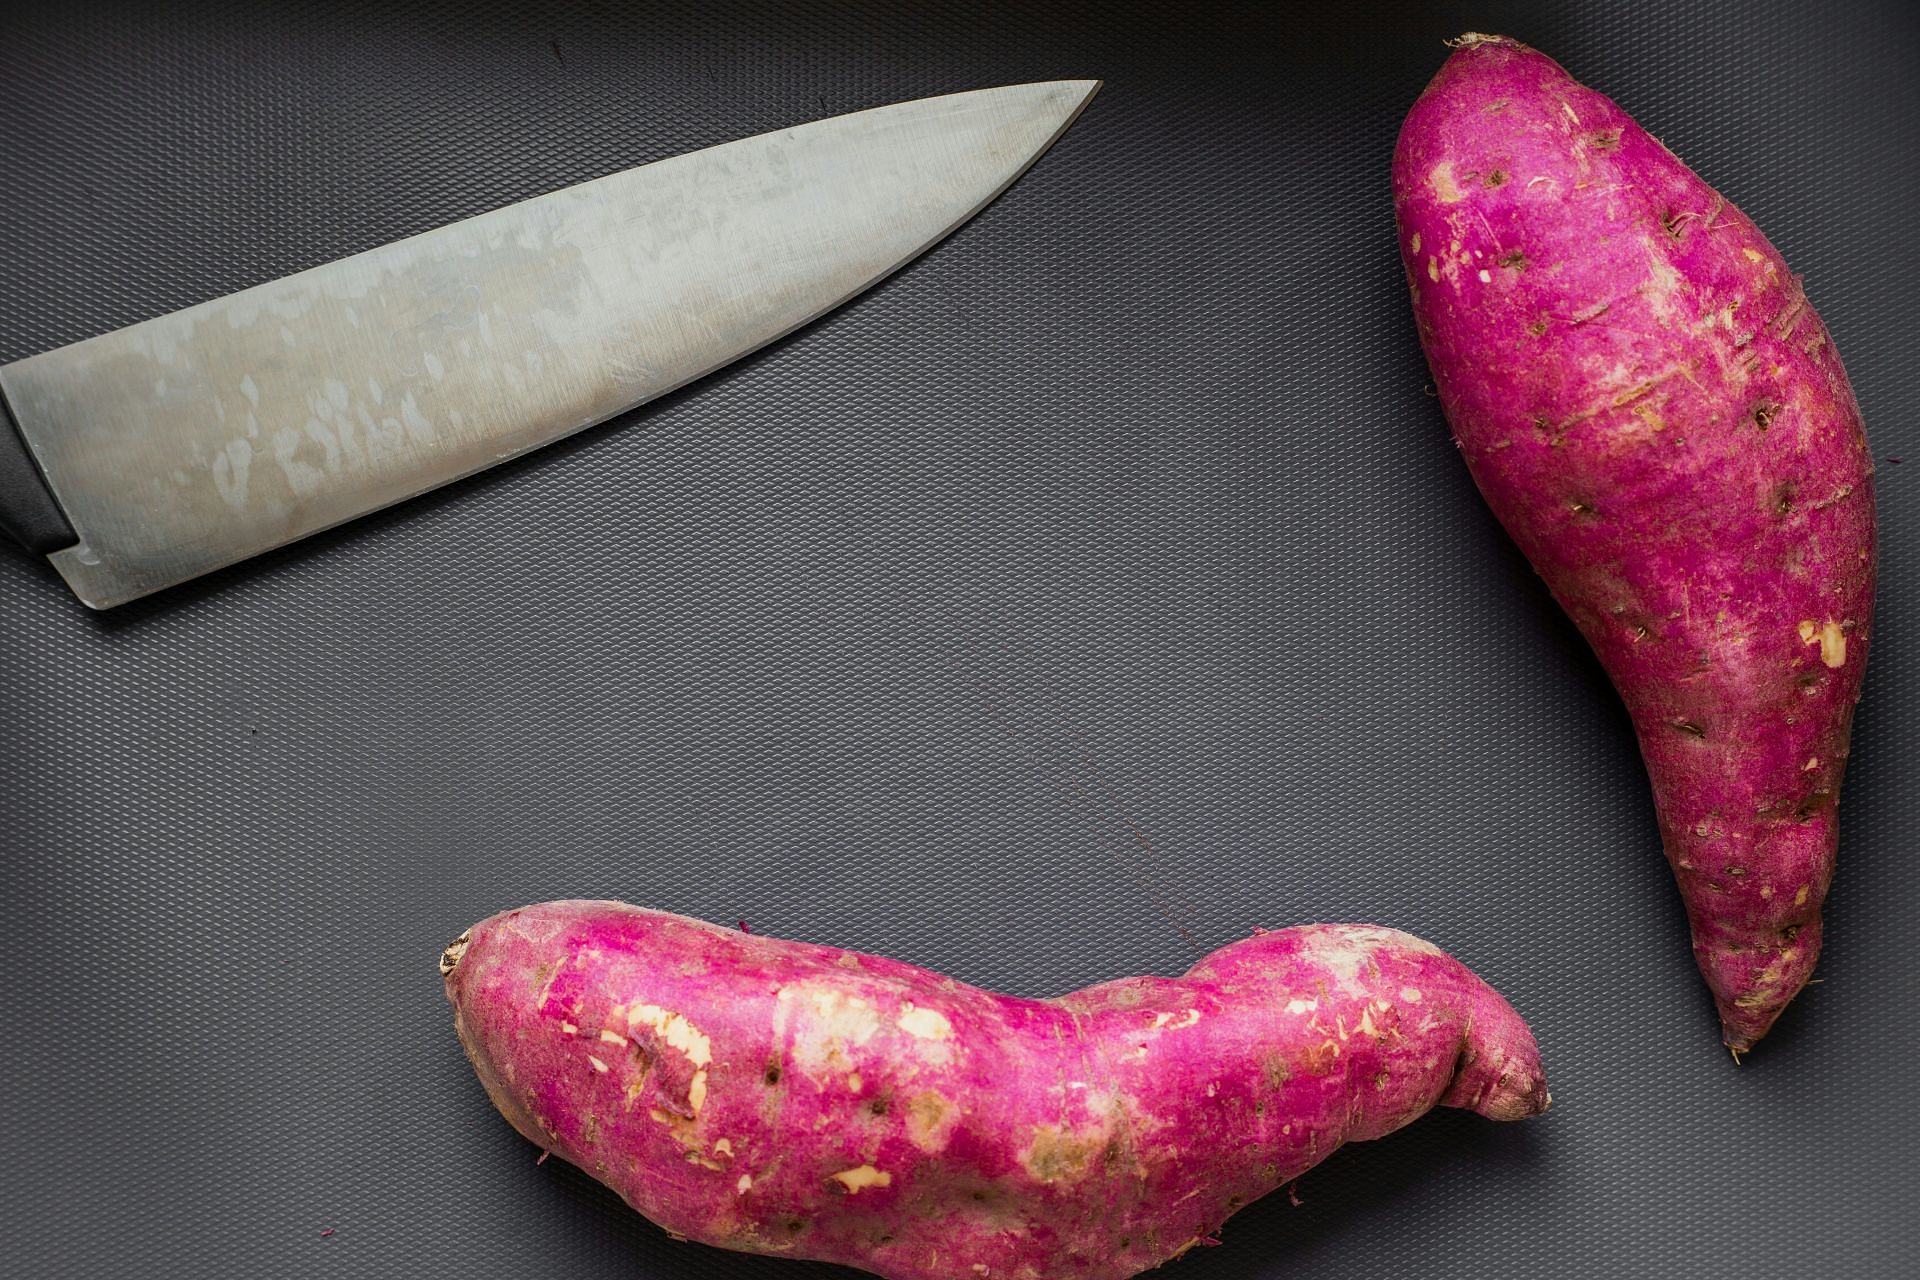 Take long and thin sweet potatoes to make this dish (Image by Louis Hansel/Unsplash)